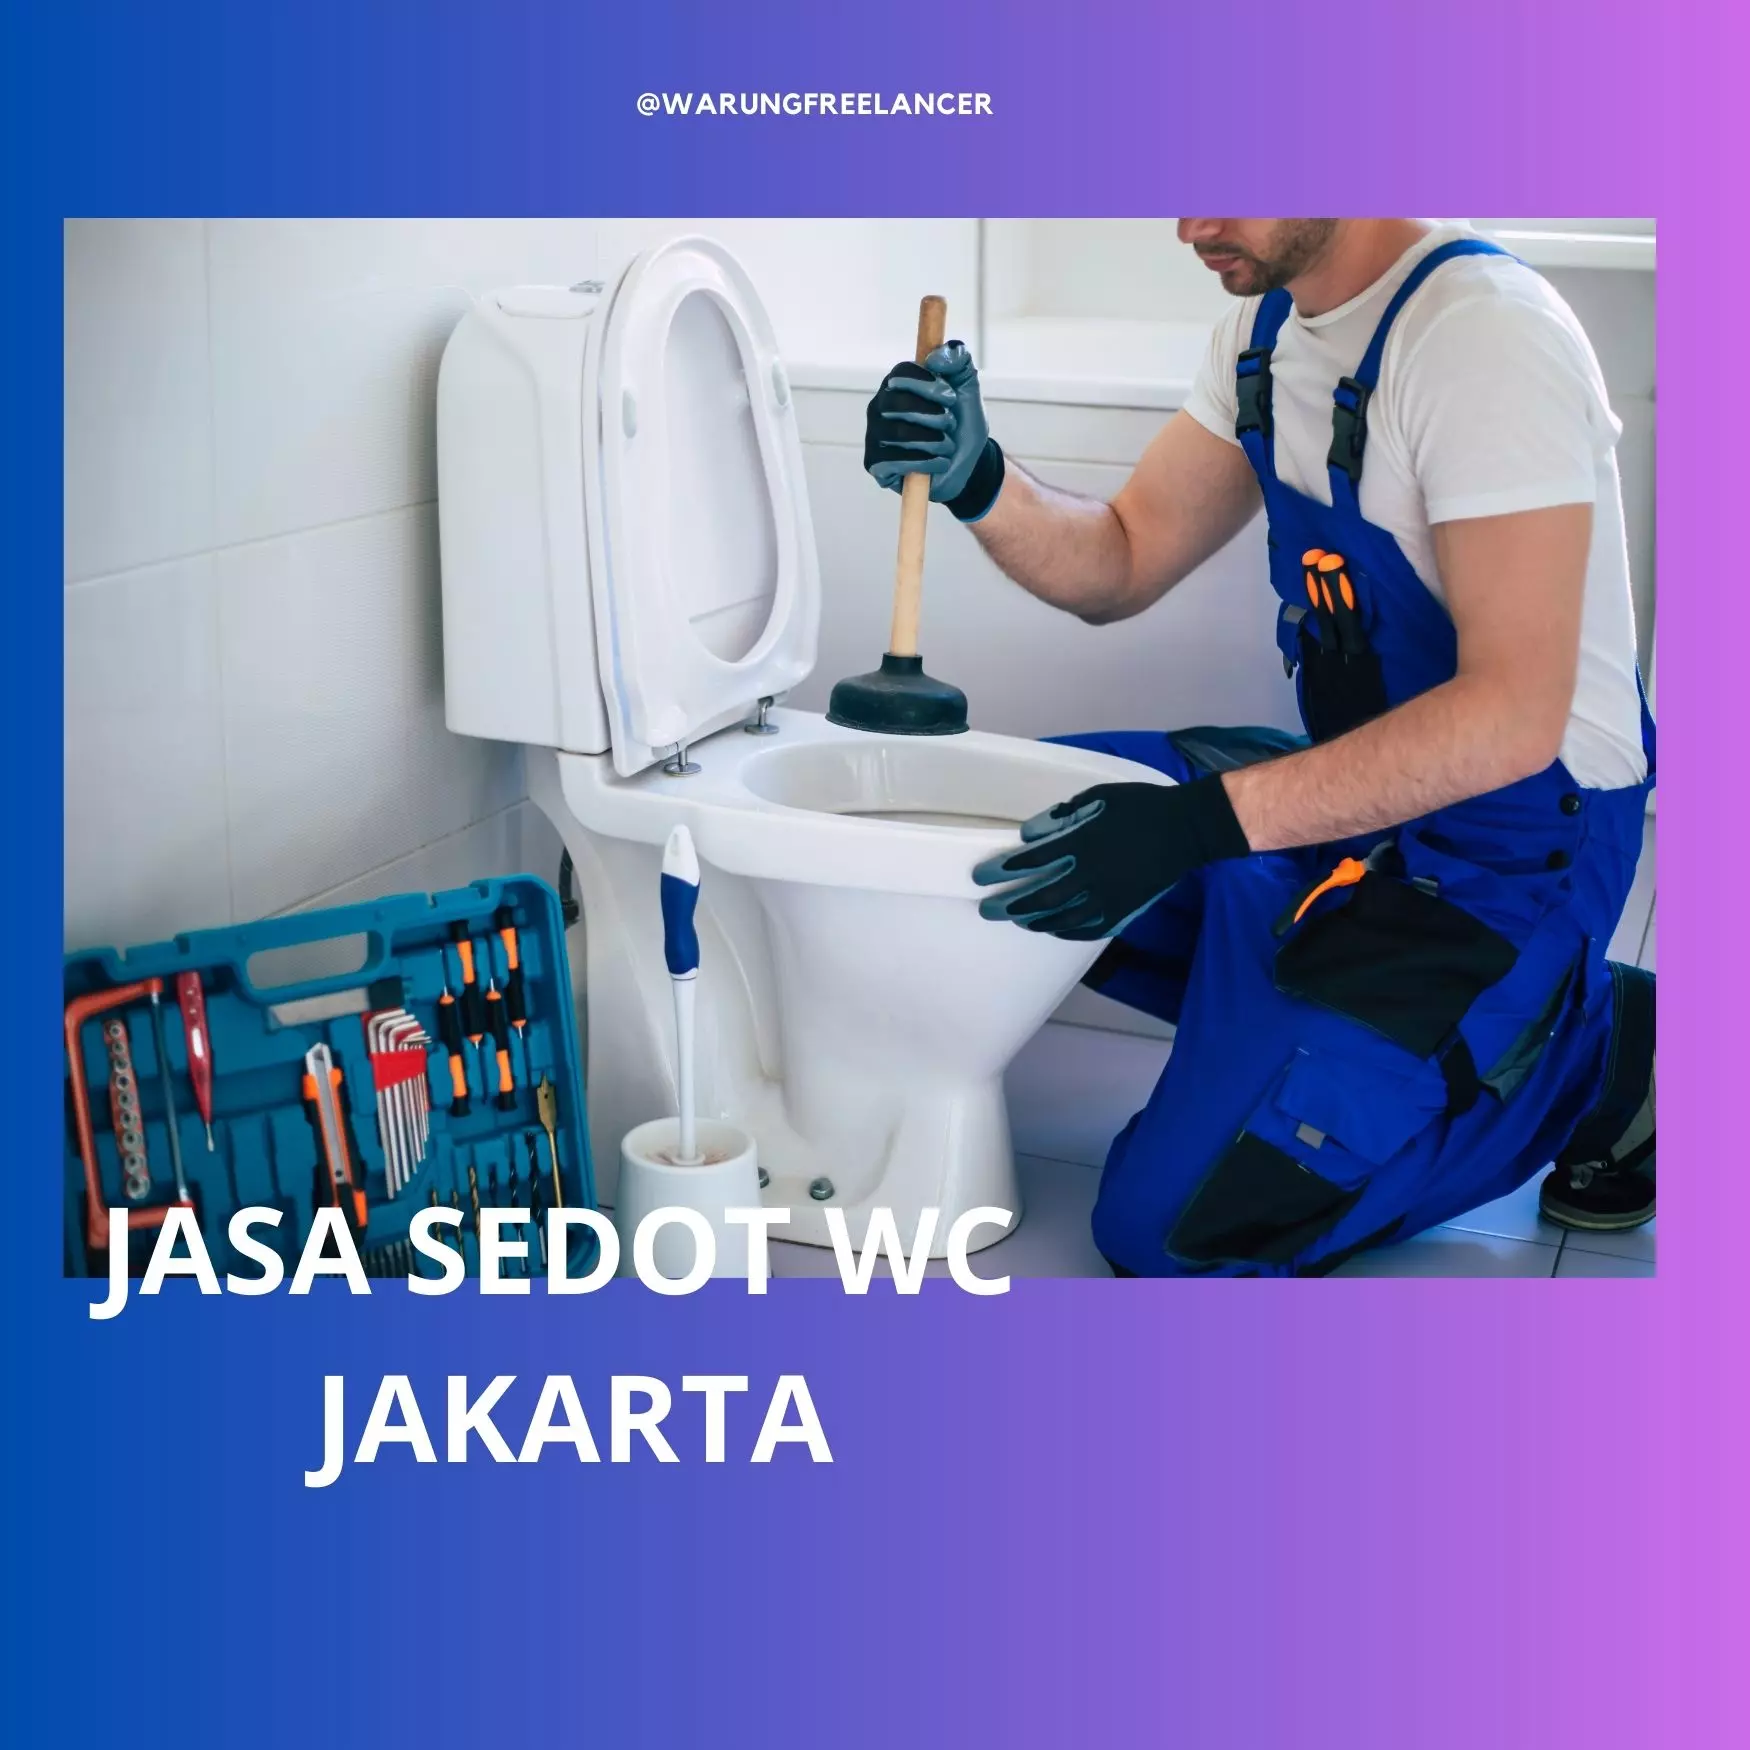 Jakarta Toilet Suction Services